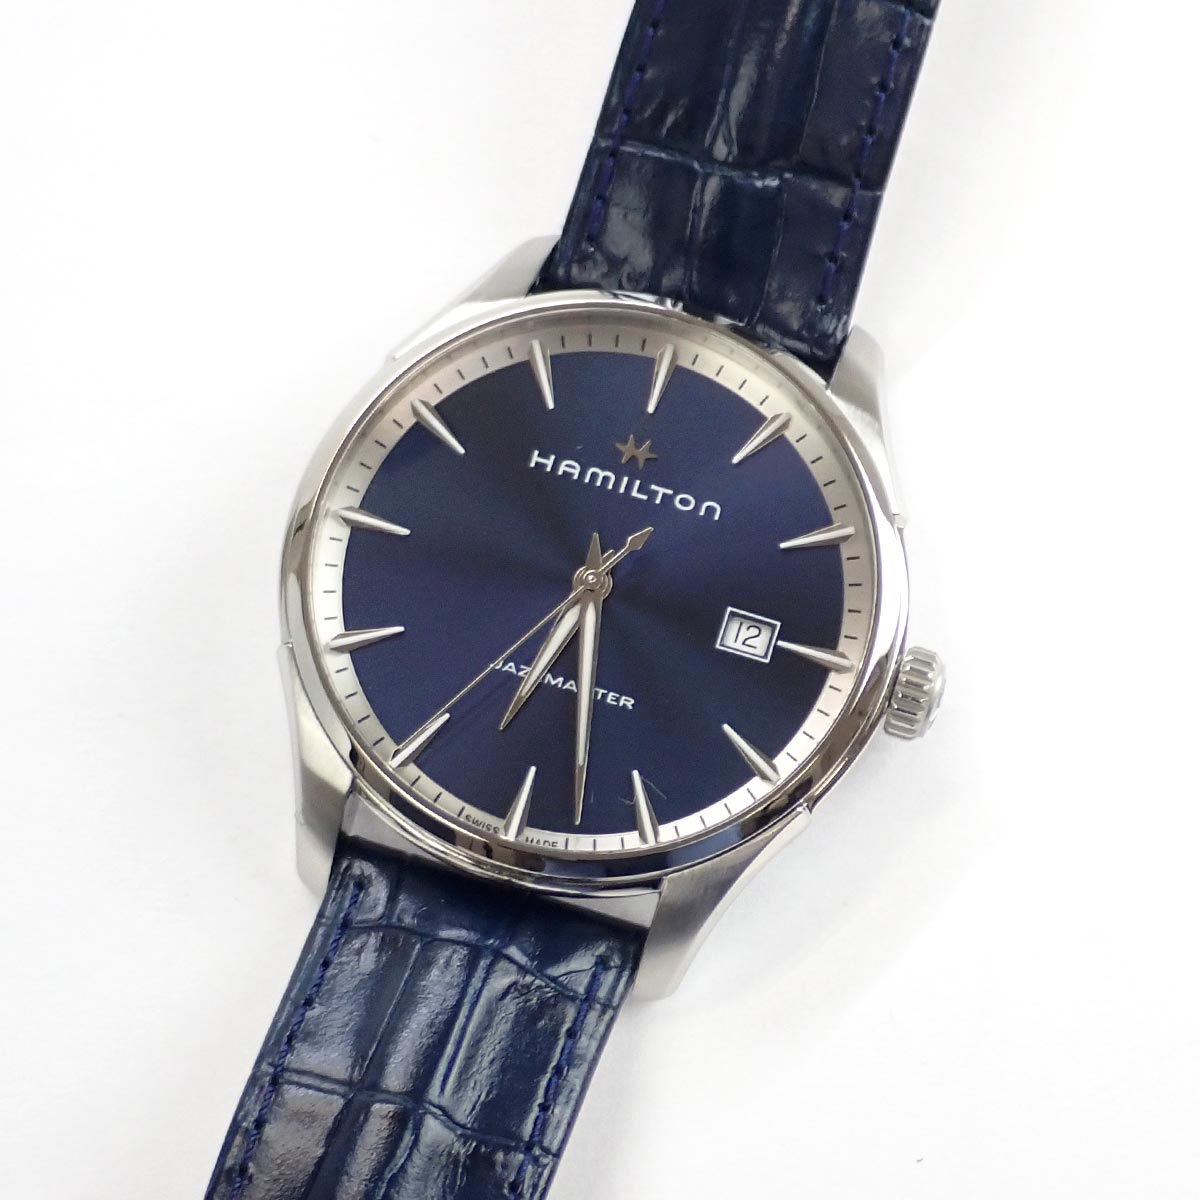 HAMILTON Jazzmaster Gent Men's Wristwatch, Stainless Steel/Calf Leather, HAMILTON Preloved H32451641